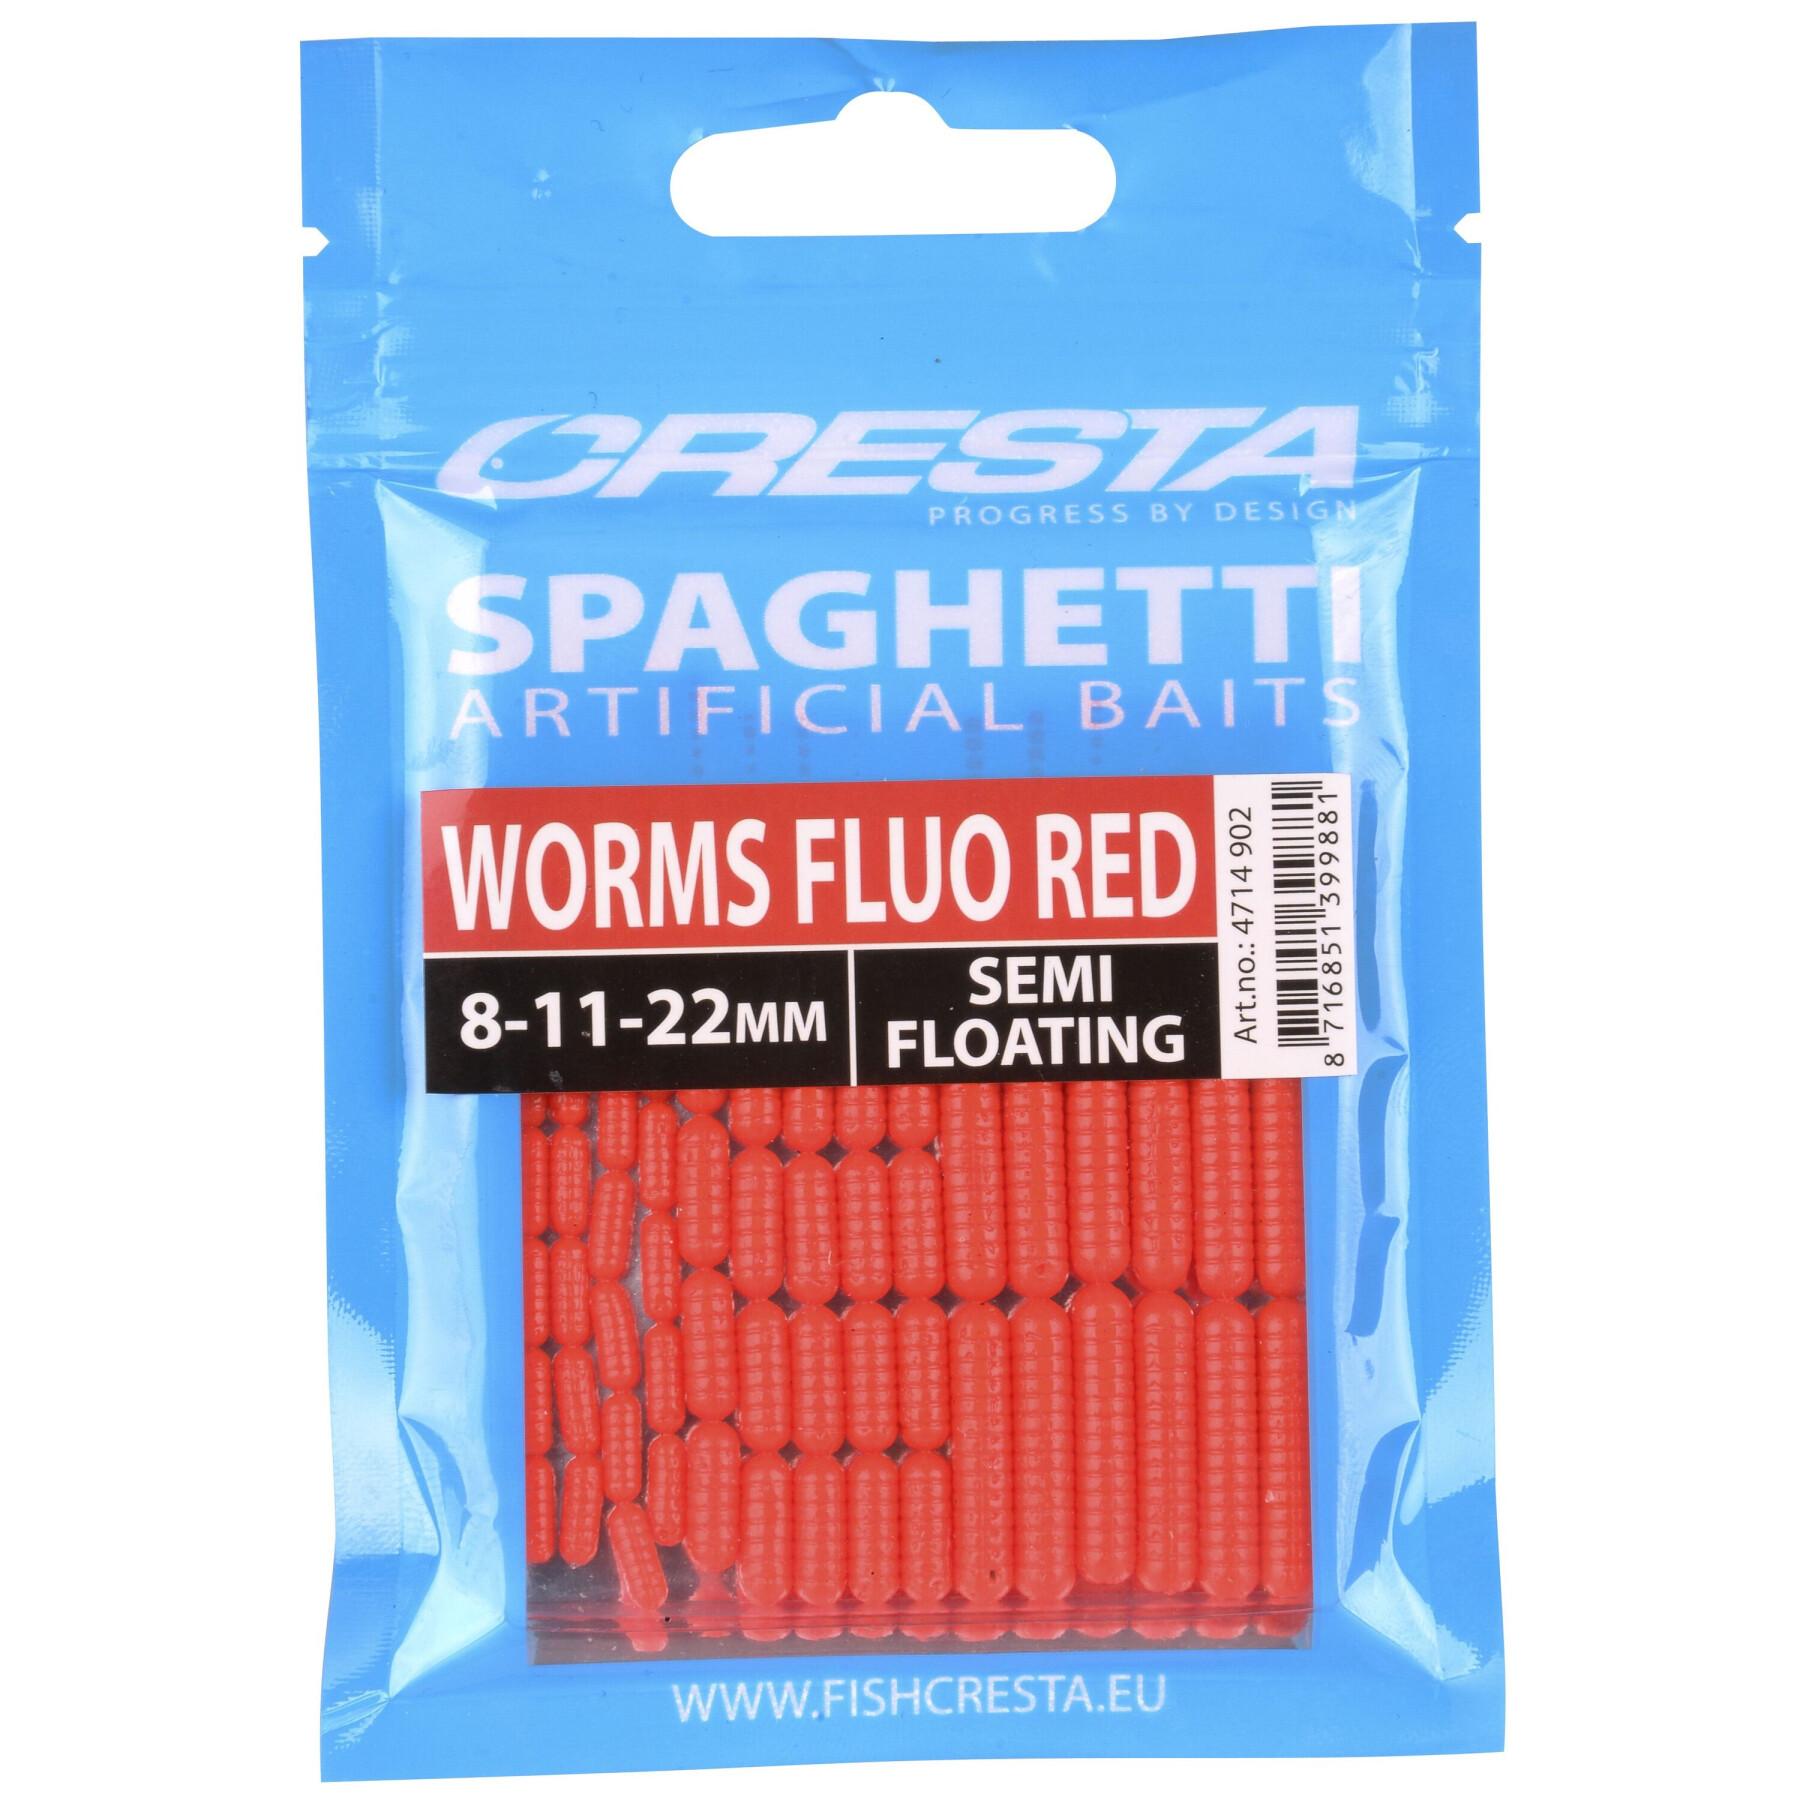 Artificial baits Cresta Spaghetti